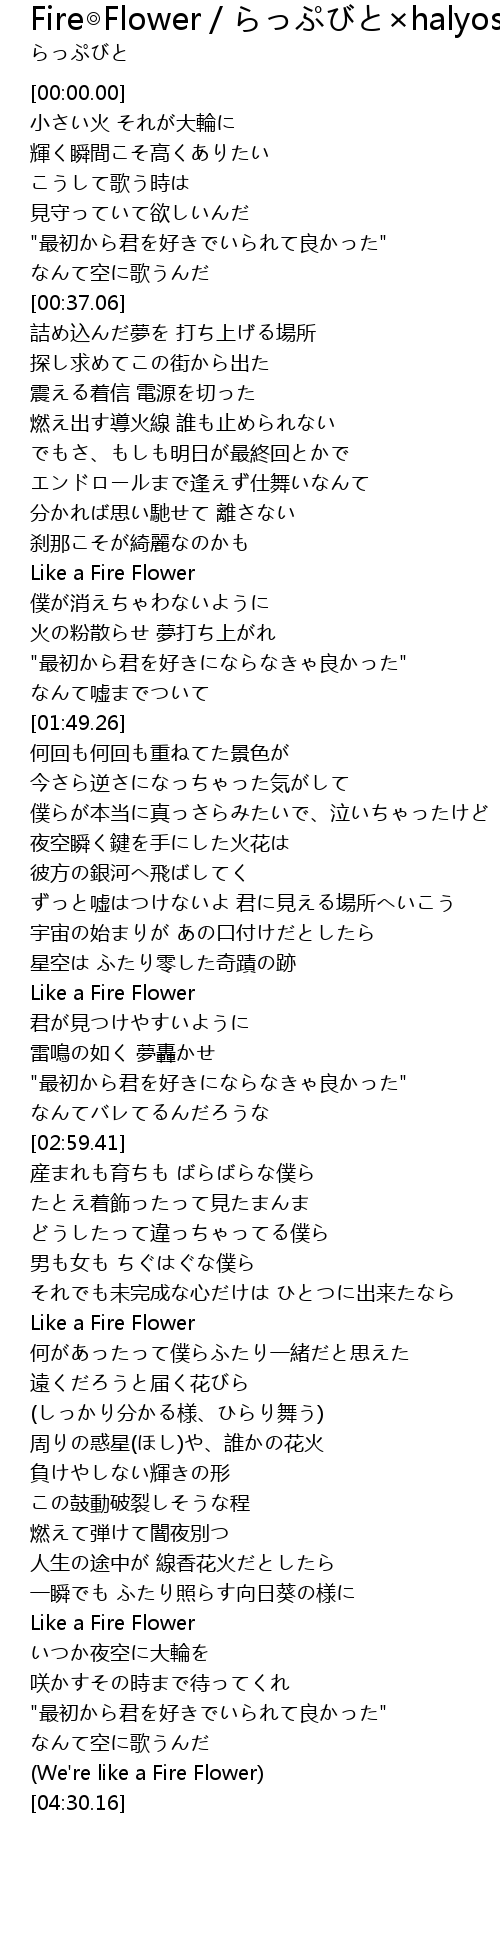 Fire Flower らっぷびと Halyosy Fire Flower Halyosy Lyrics Follow Lyrics